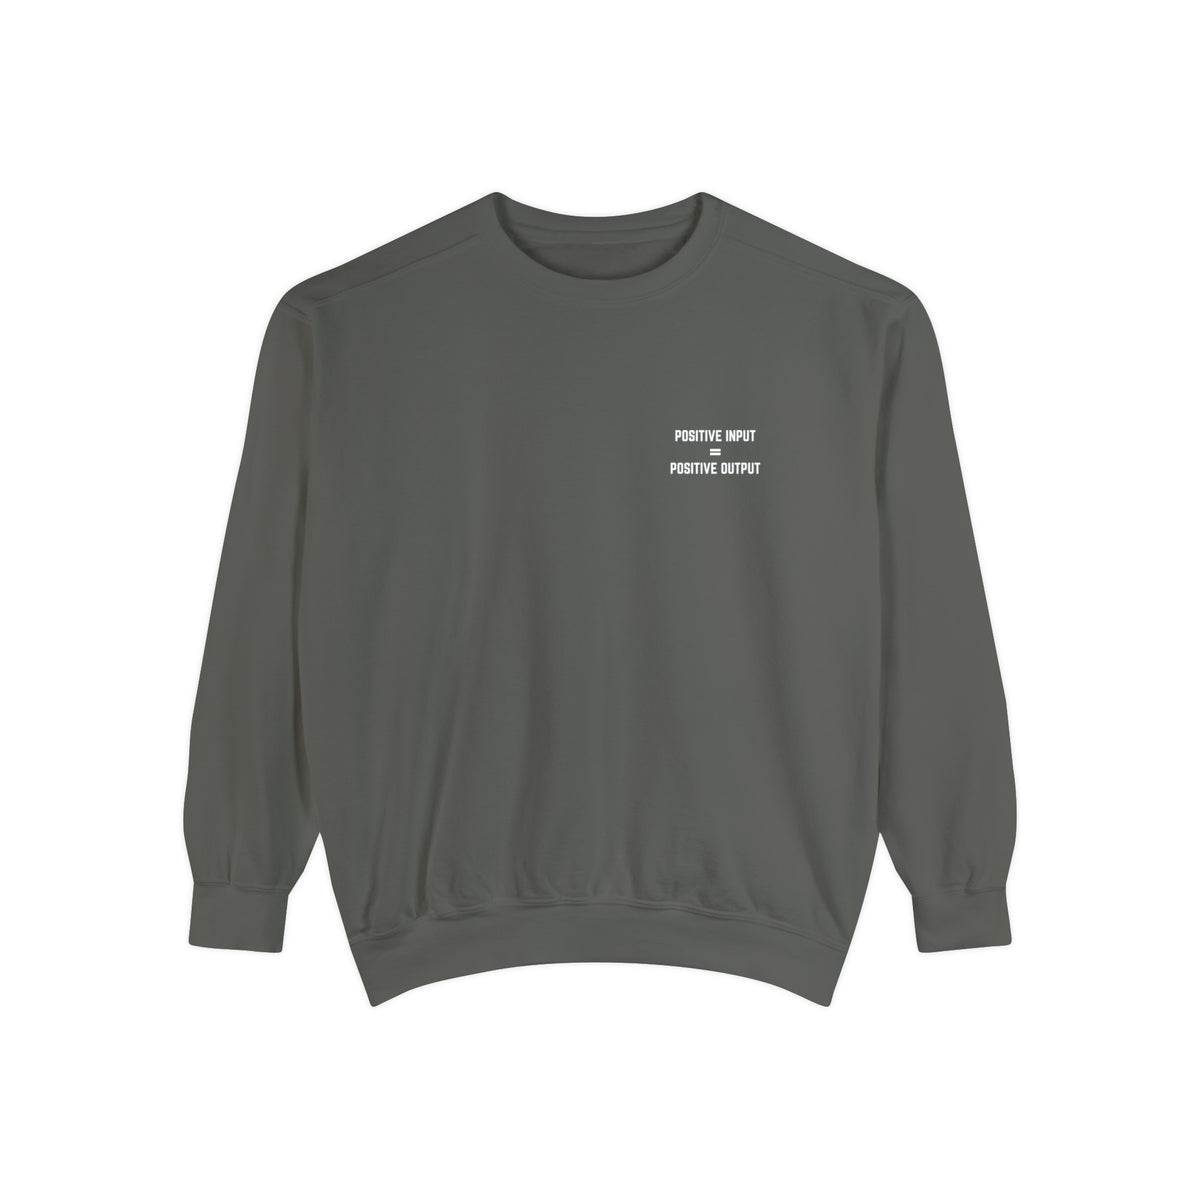 Champion Mindset Adult Crewneck Sweatshirt